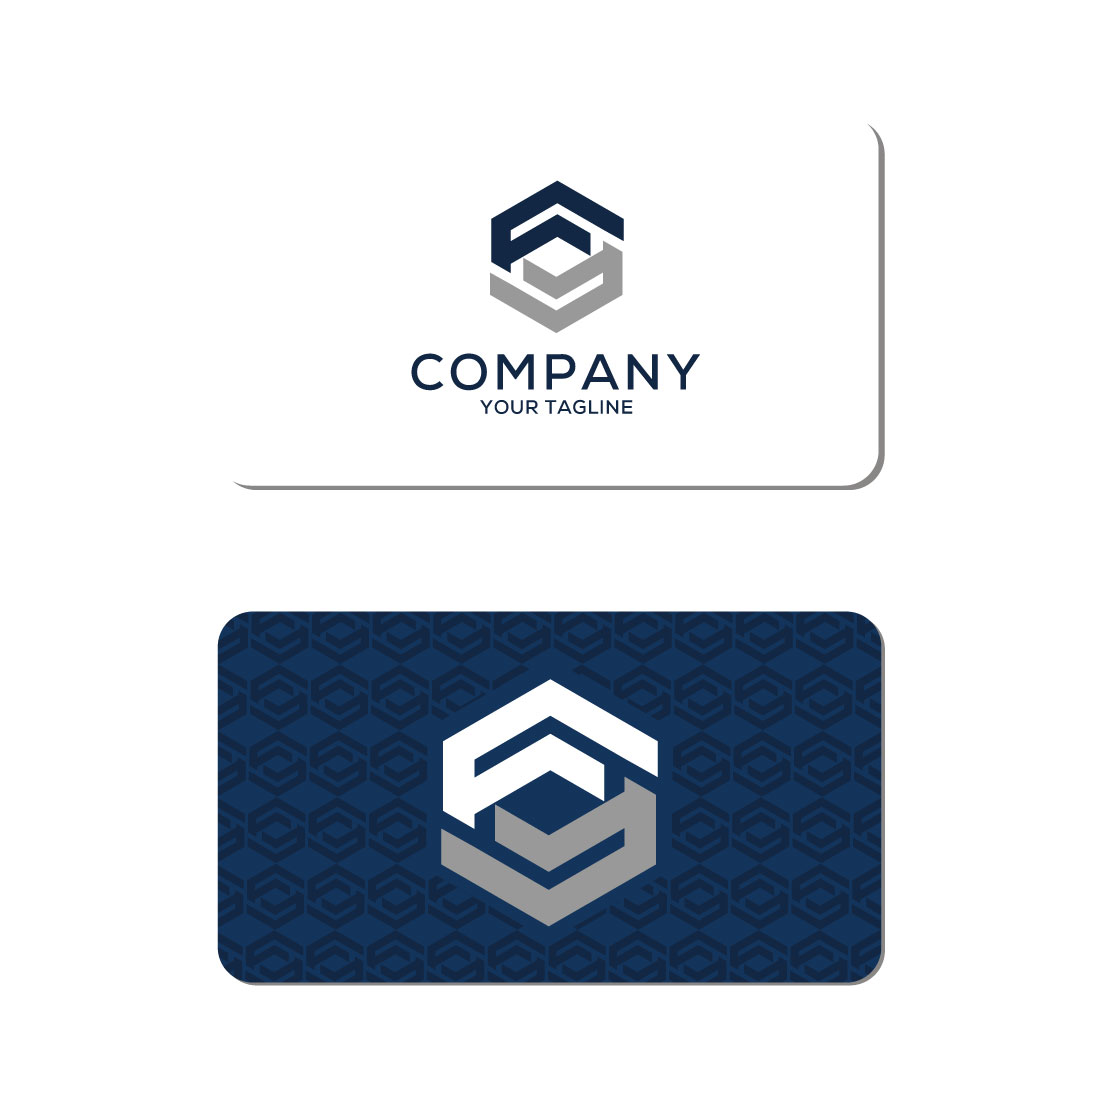 Business card with a hexagonal logo.